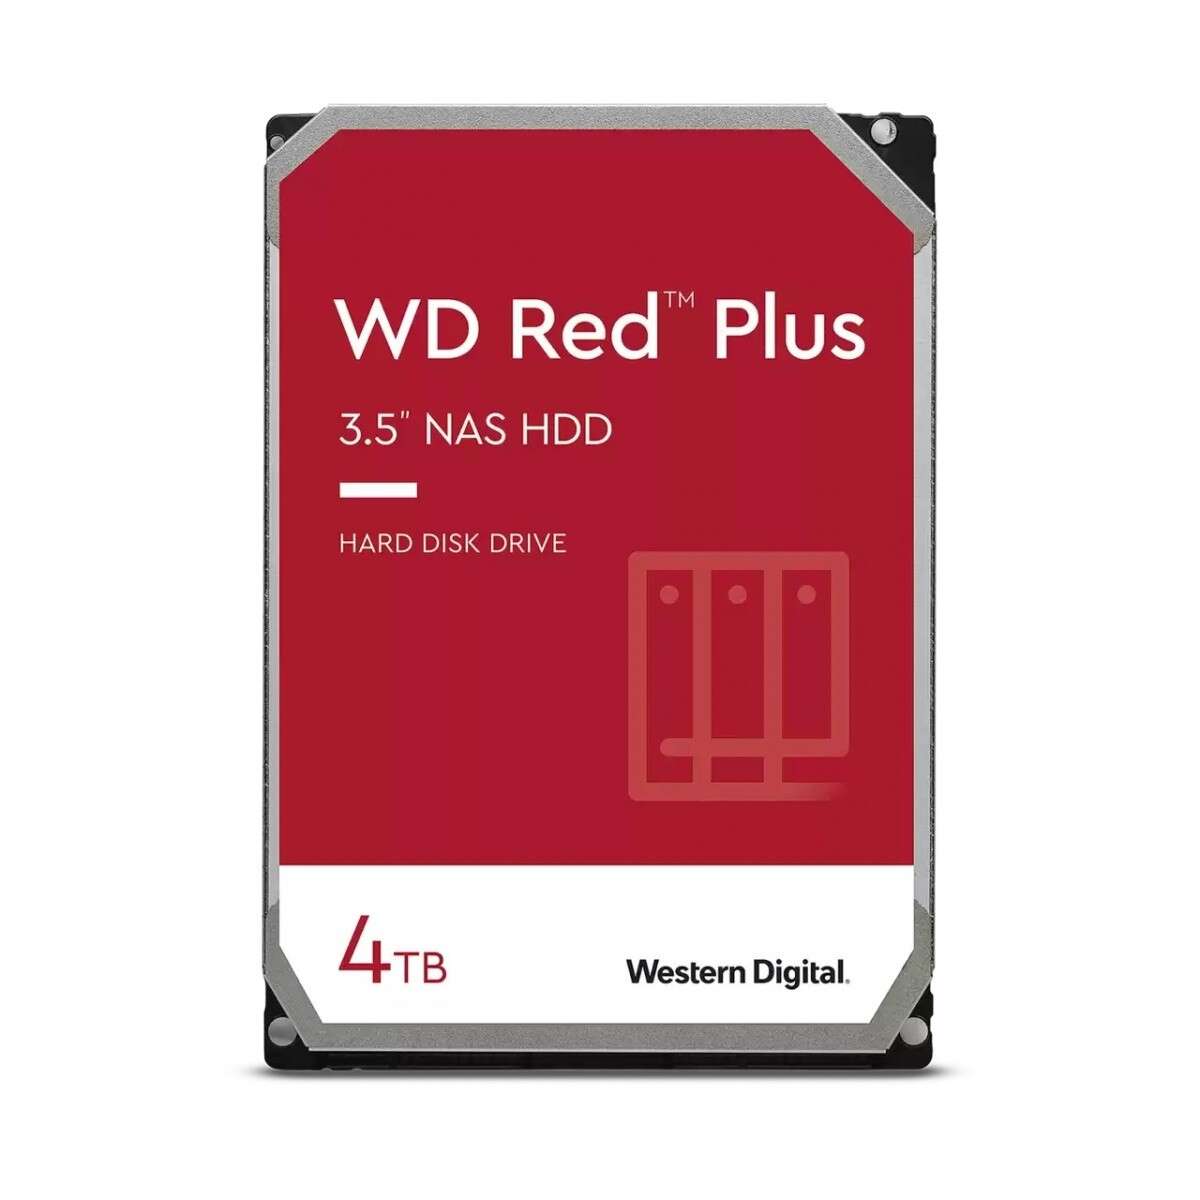 Western digital 4tb red plus (cmr,256mb) sata3 3.5" nas hdd